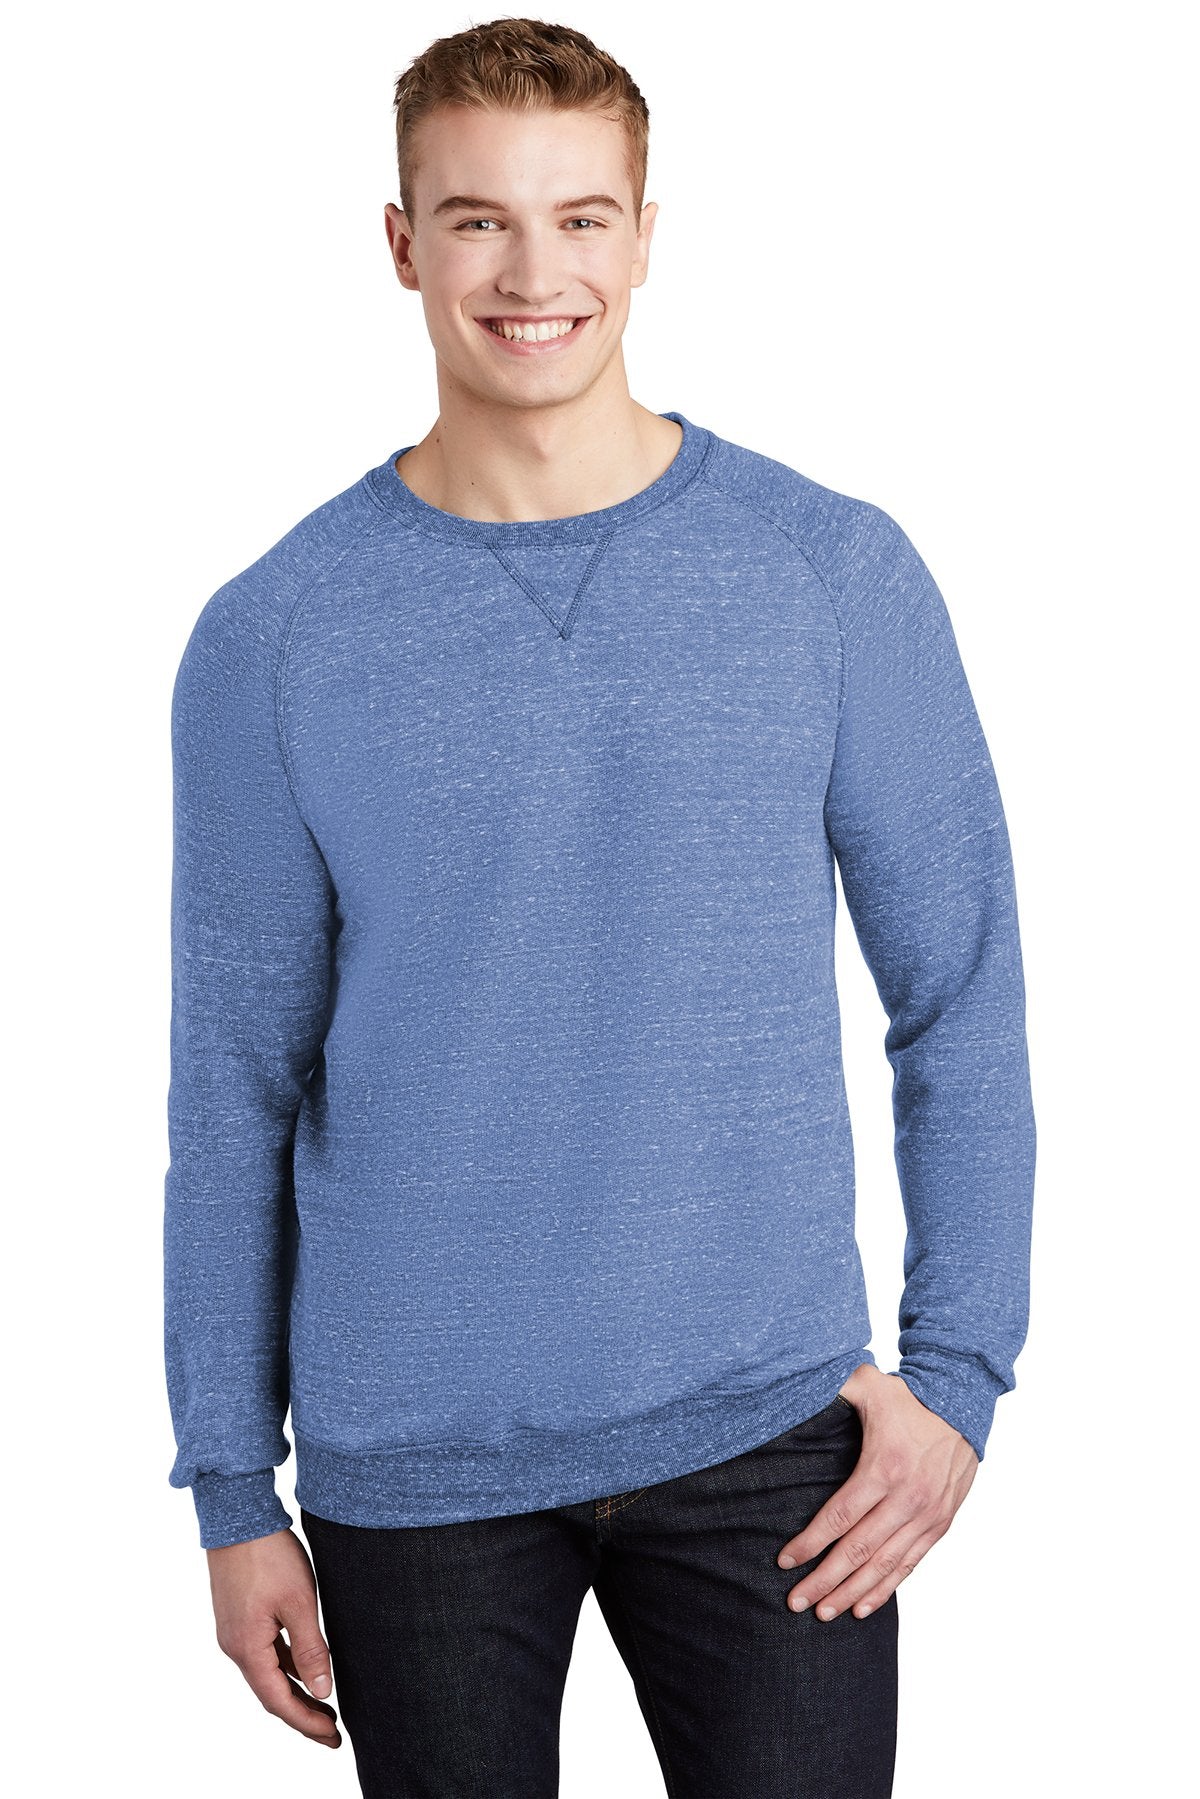 Jerzees Royal 91M custom design sweatshirts